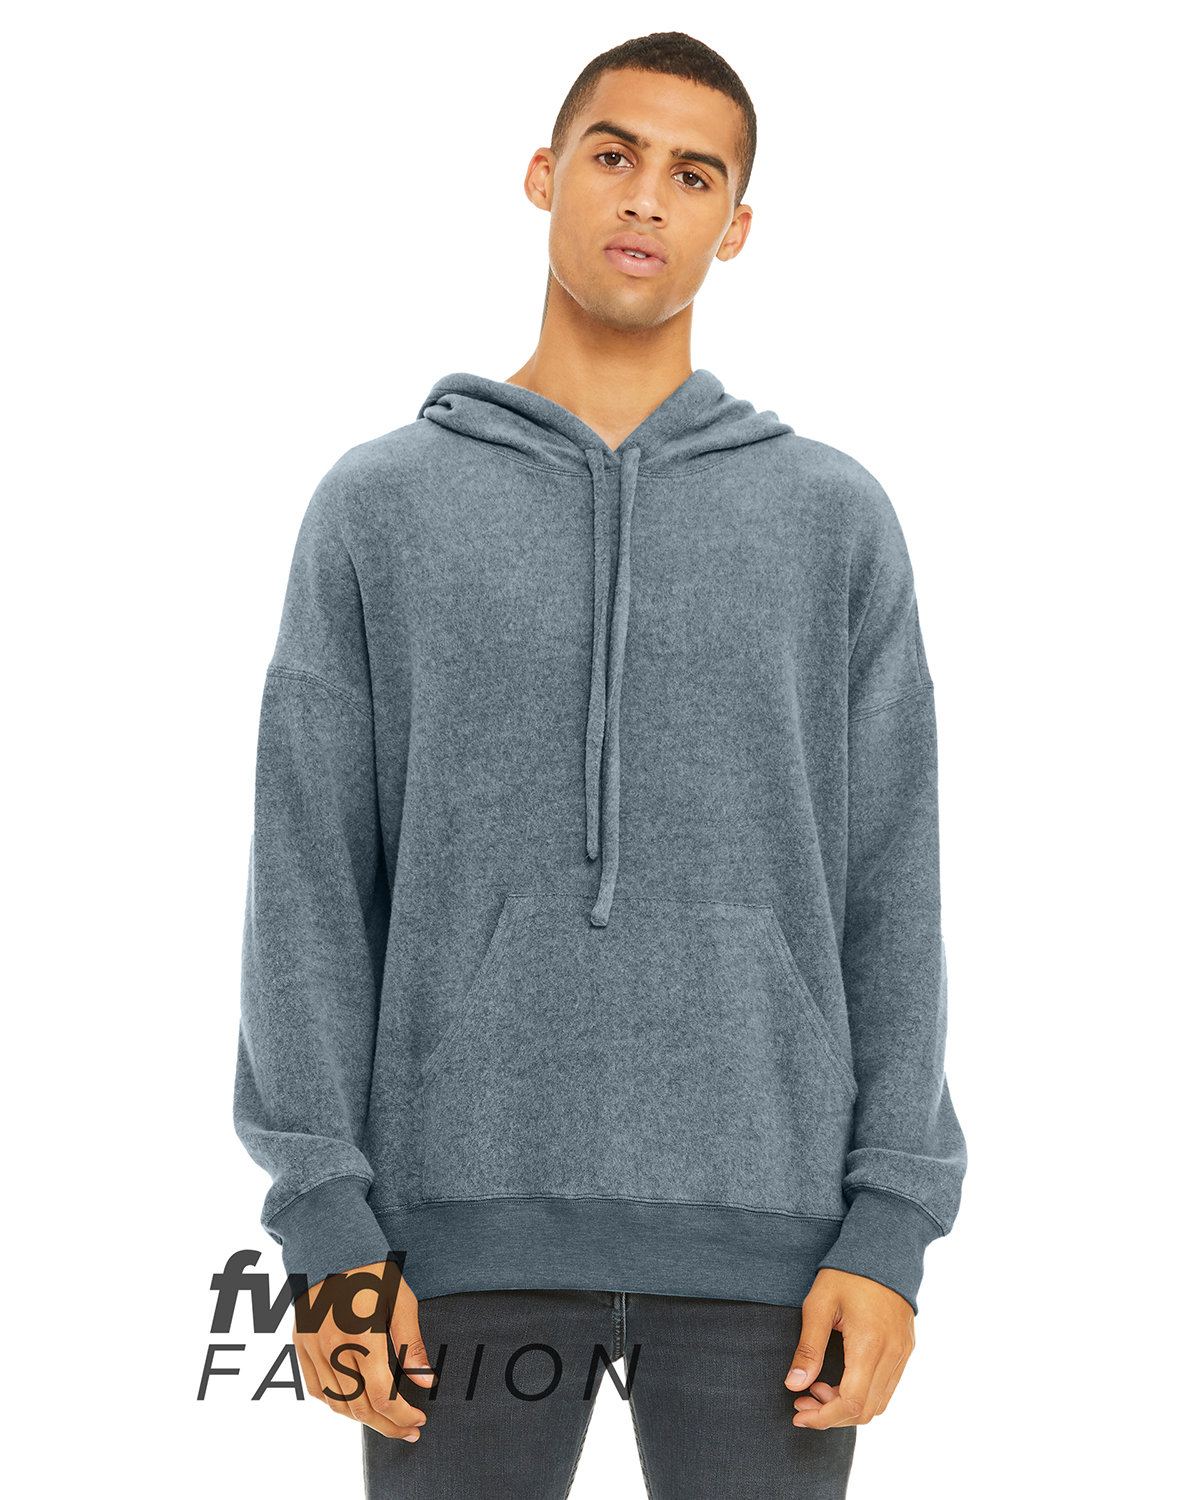 Front view of FWD Fashion Unisex Sueded Fleece Pullover Sweatshirt